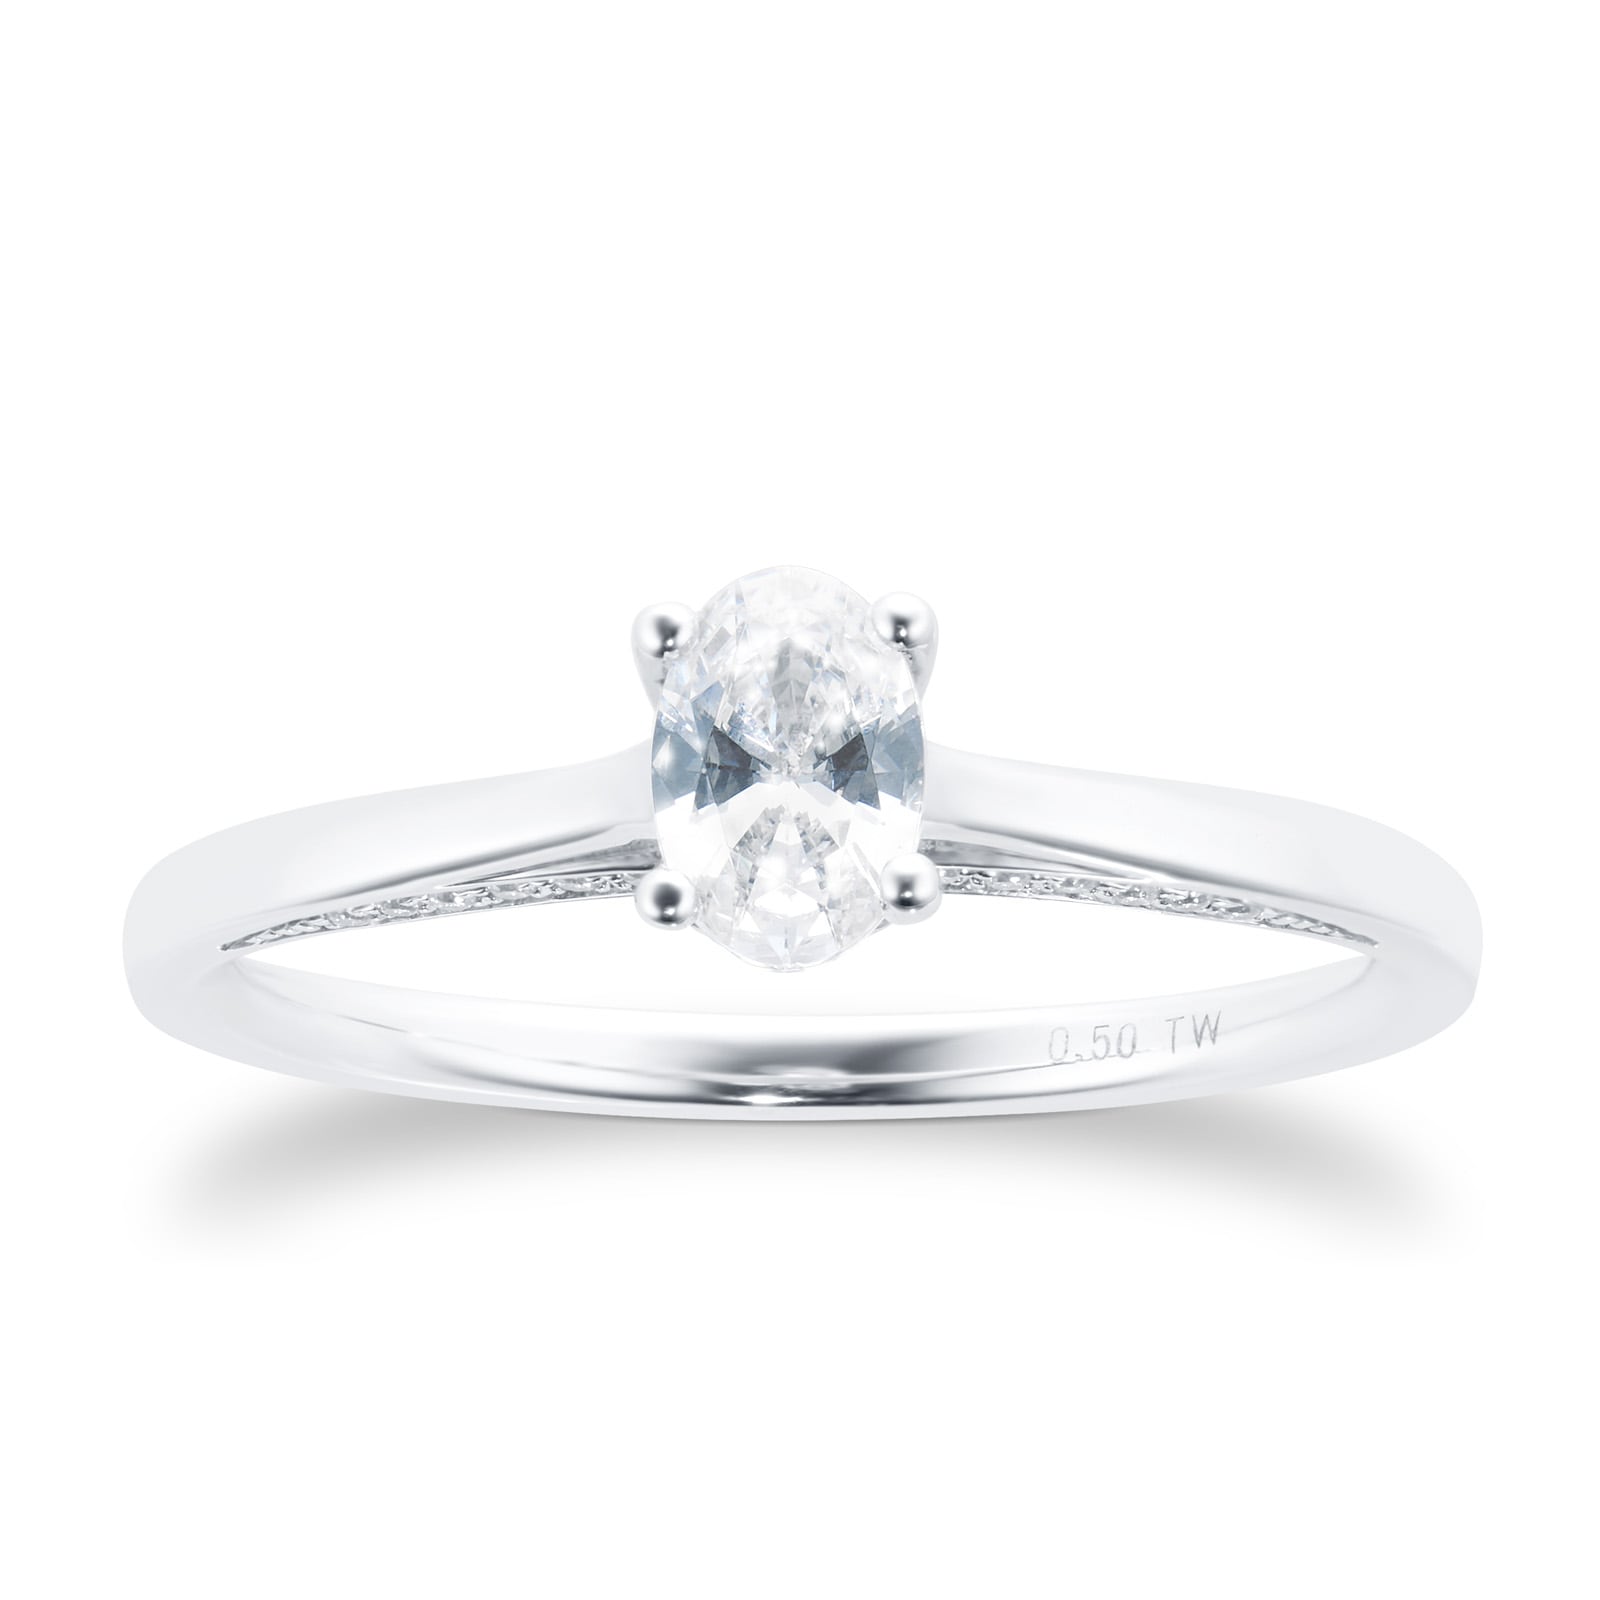 Platinum 0.50cttw Oval Cut Diamond Ring - Ring Size P